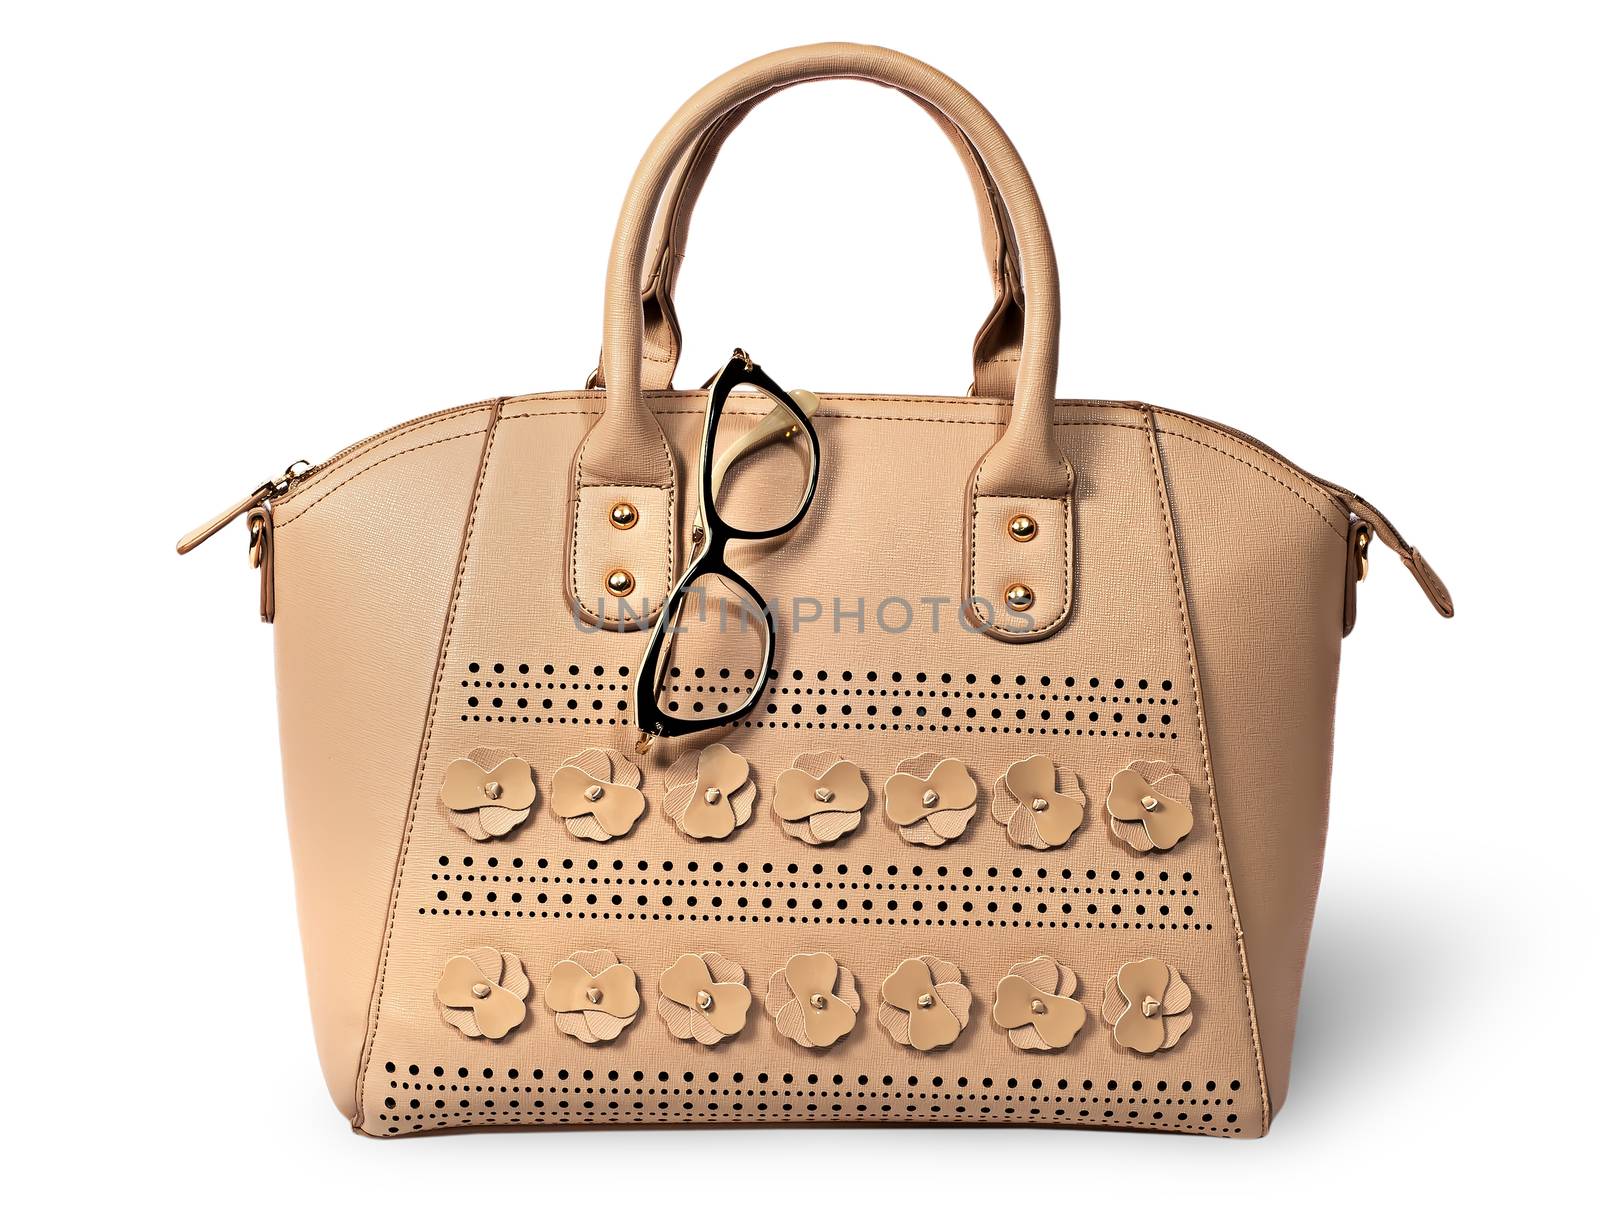 Elegant beige handbag and glasses by Cipariss